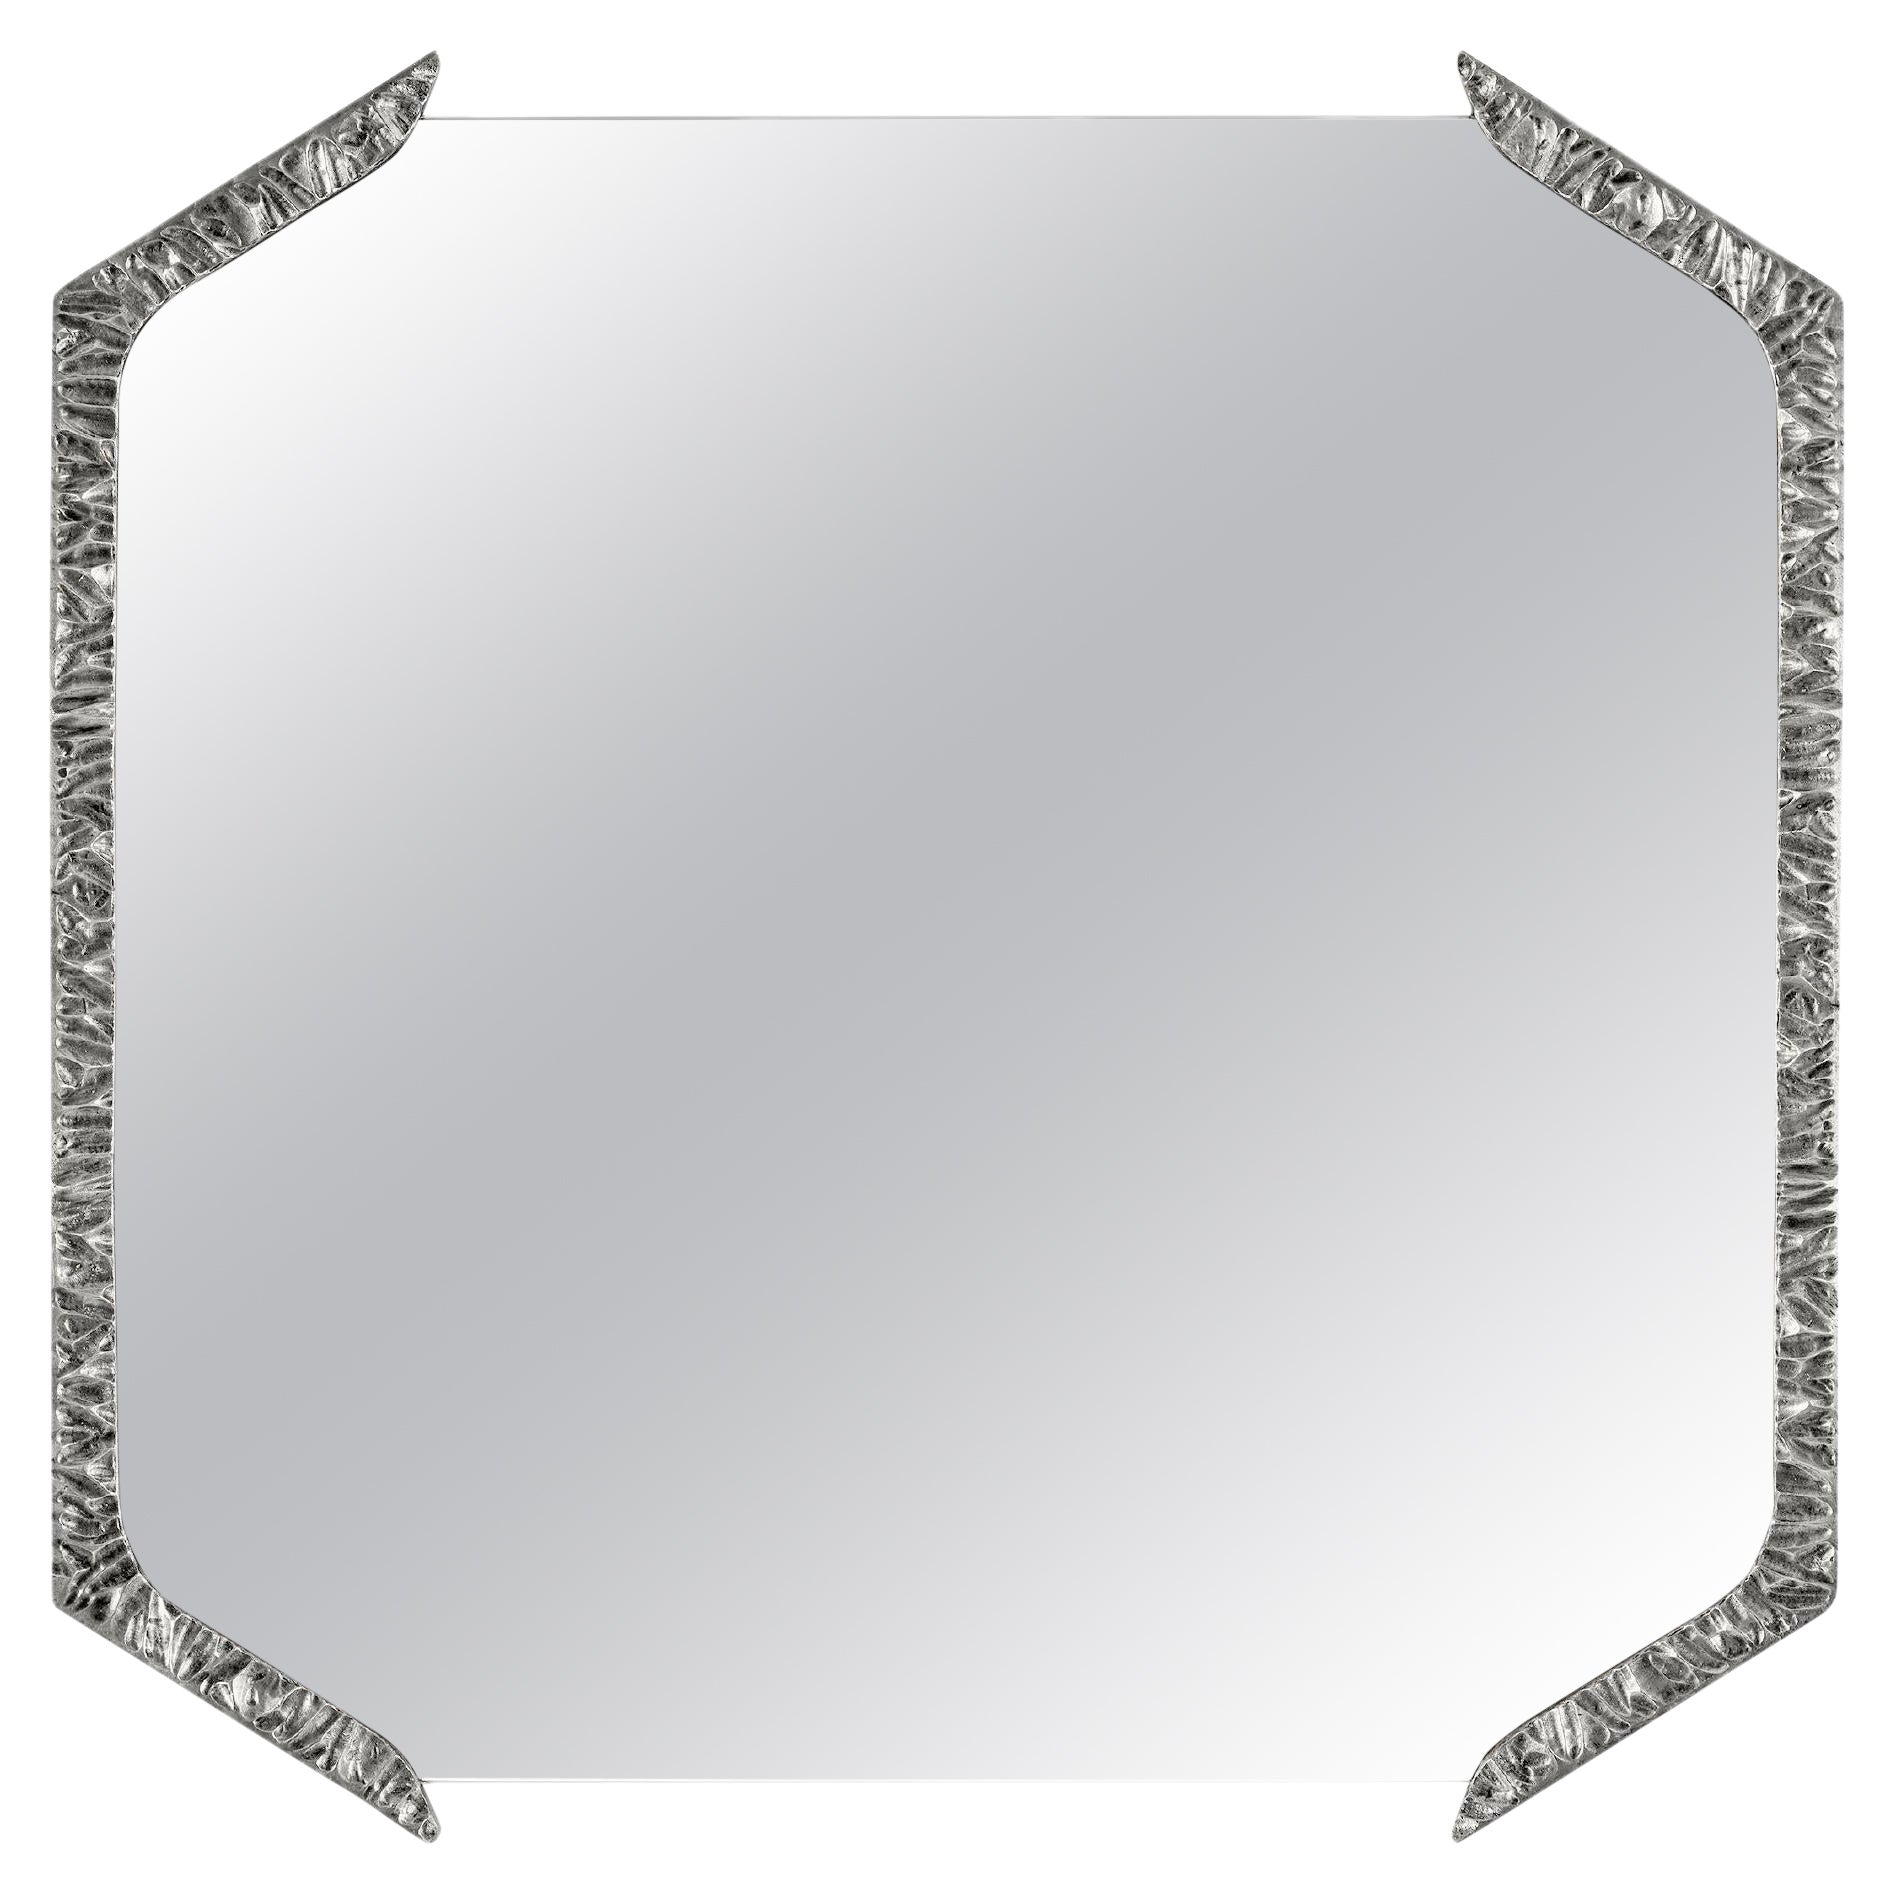 Alentejo Nickel Square Mirror by InsidherLand For Sale